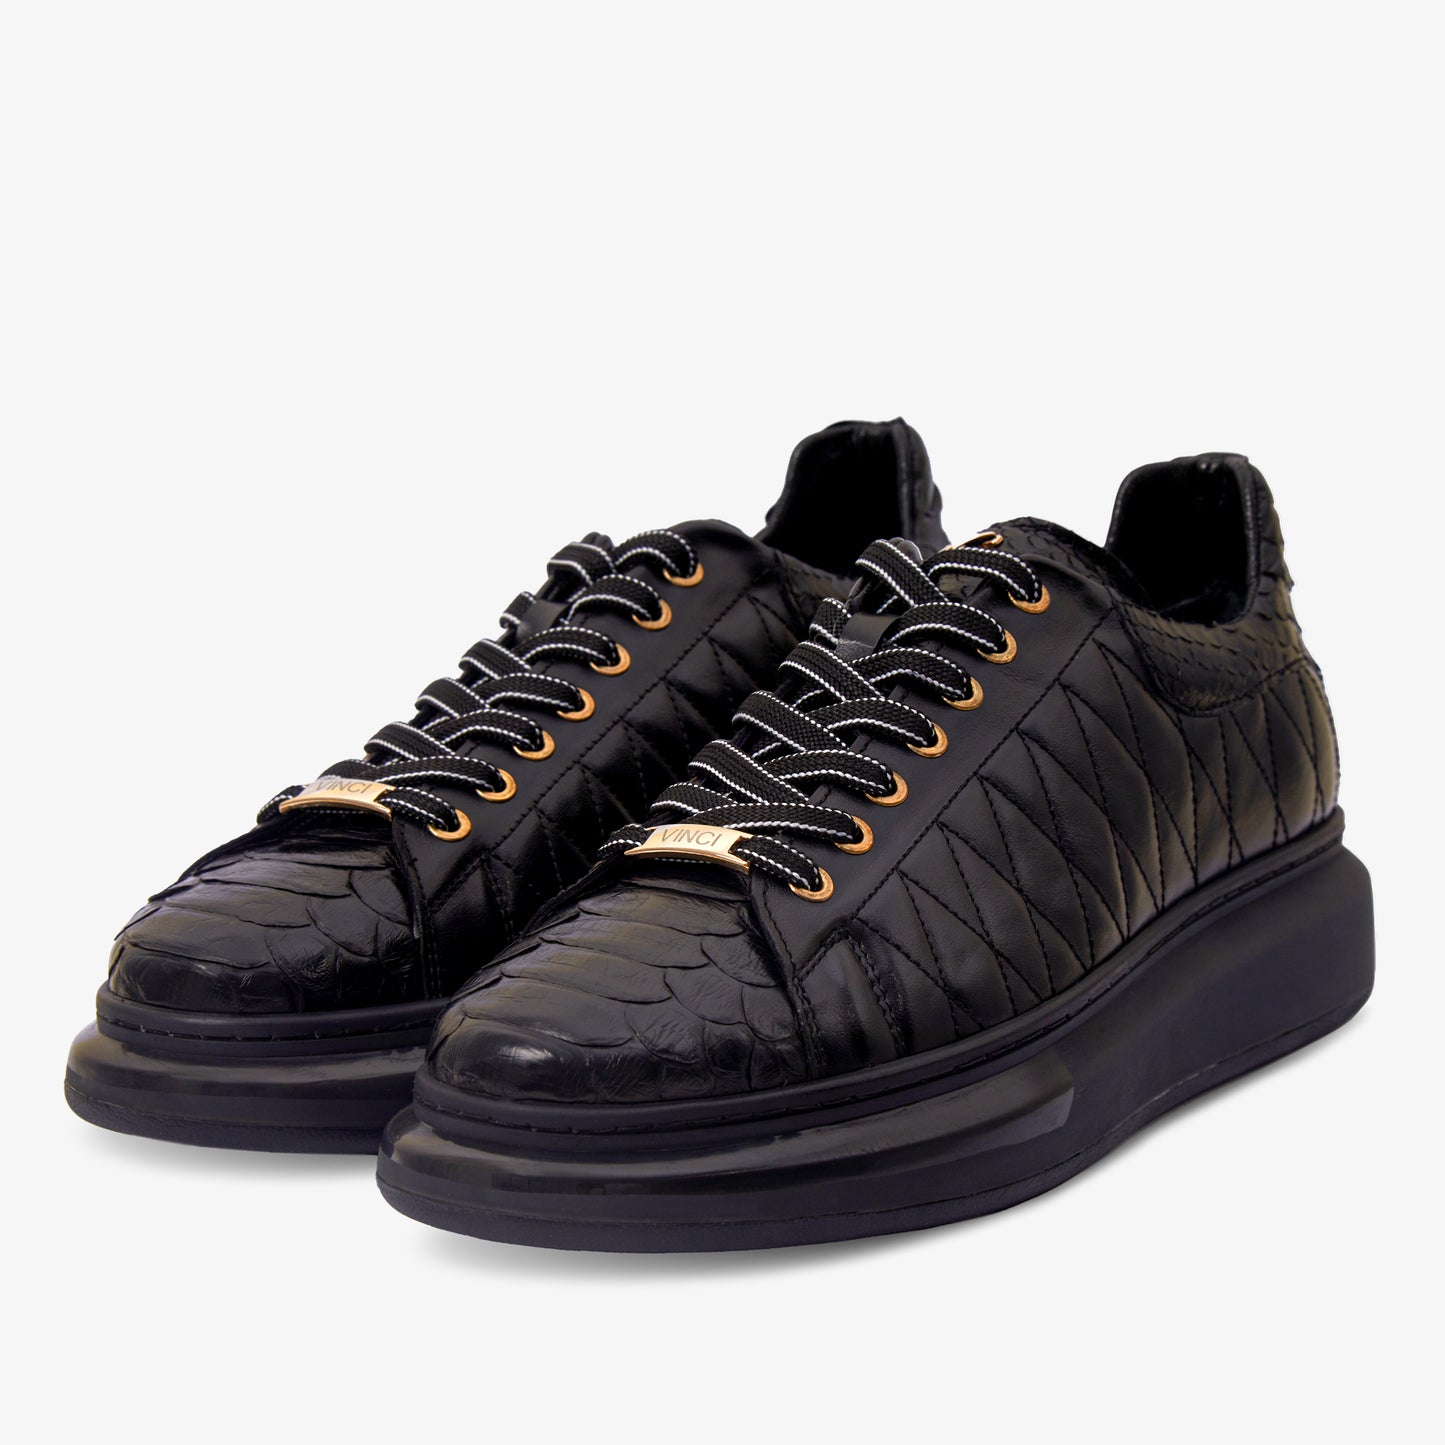 The Adler Black Snk Leather Men Sneaker Limited Edition